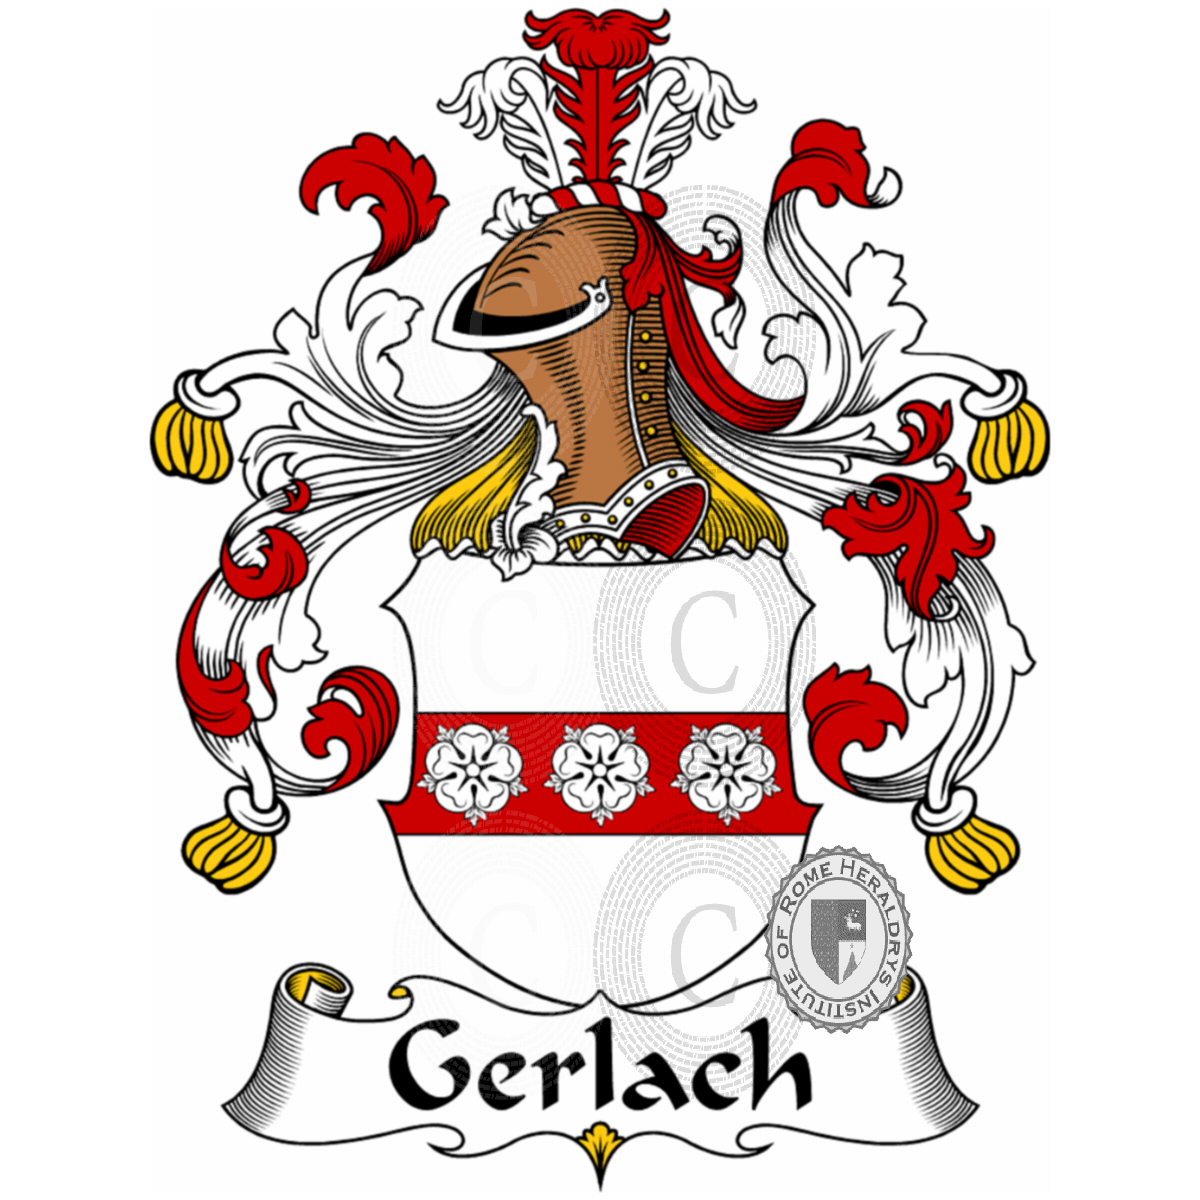 Brasão da famíliaGerlach, Gerlach de Gerlachhein,Gerlaci,Gerlacus